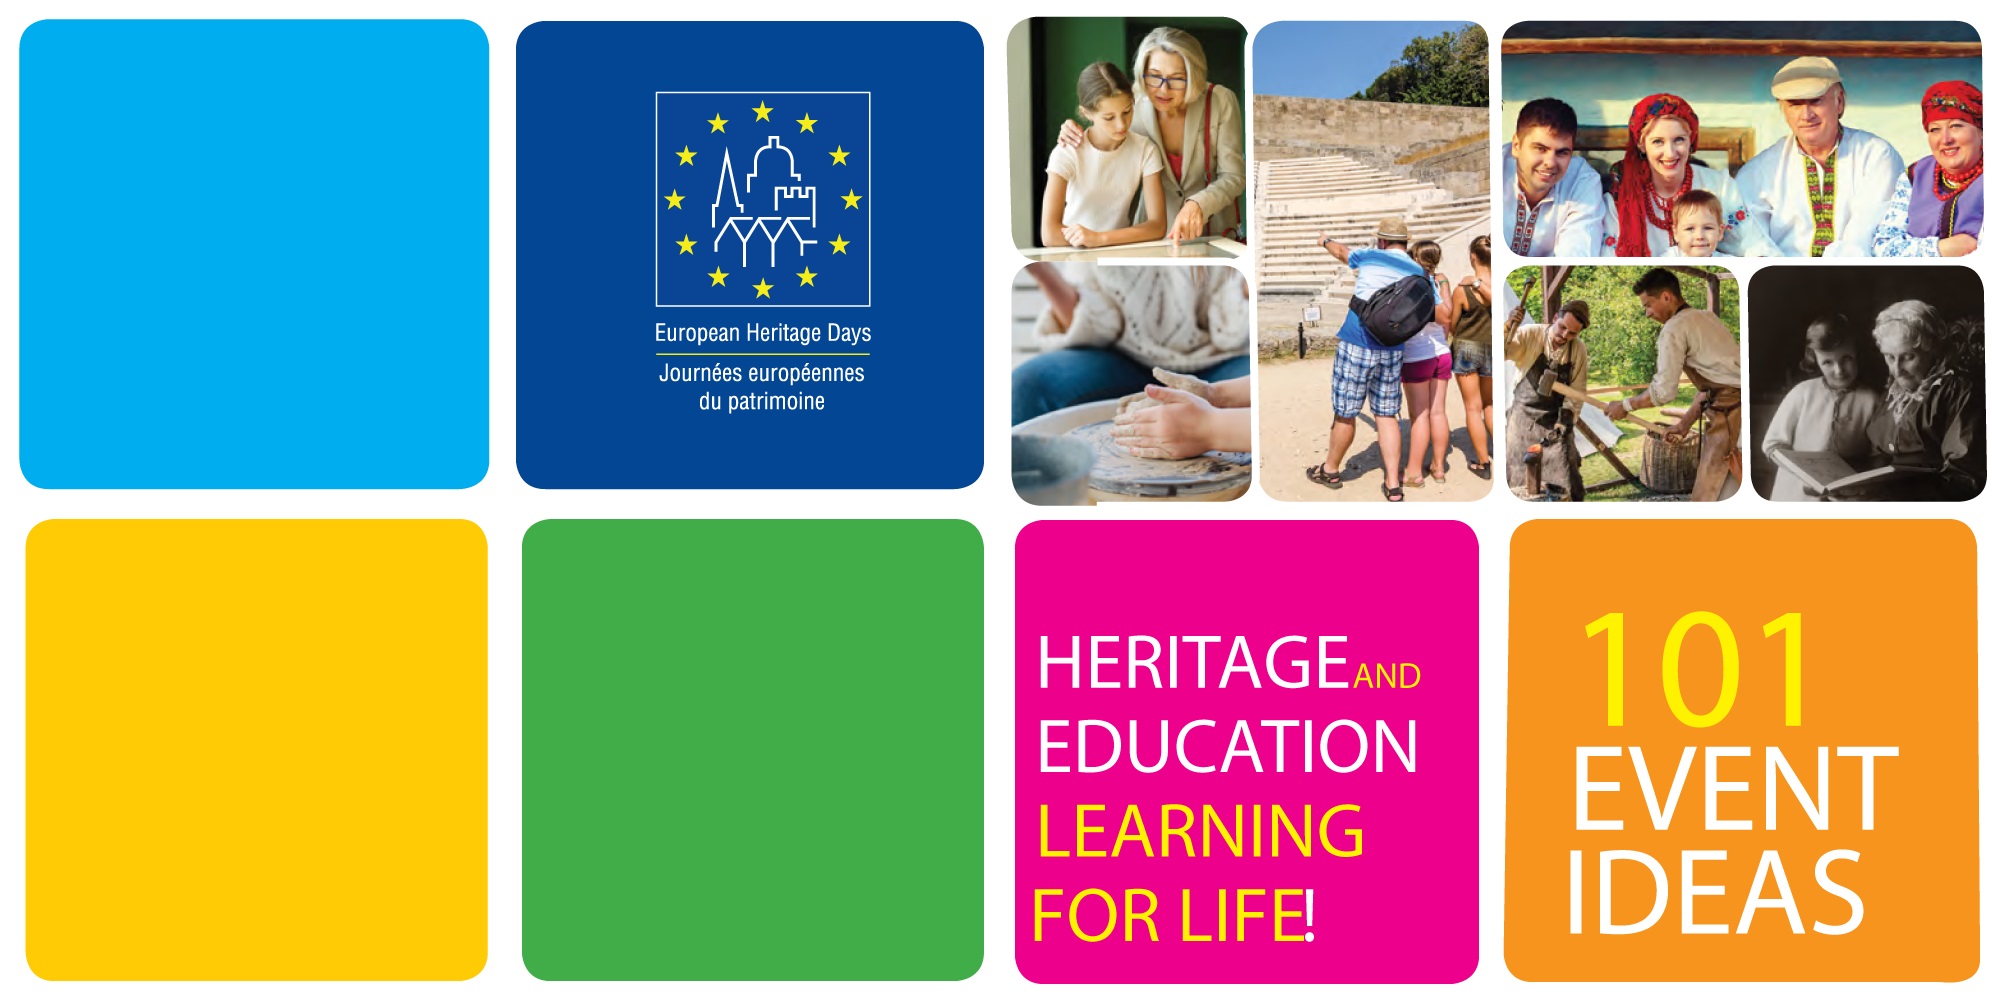 European Heritage Days 2020 Theme: Heritage and Education